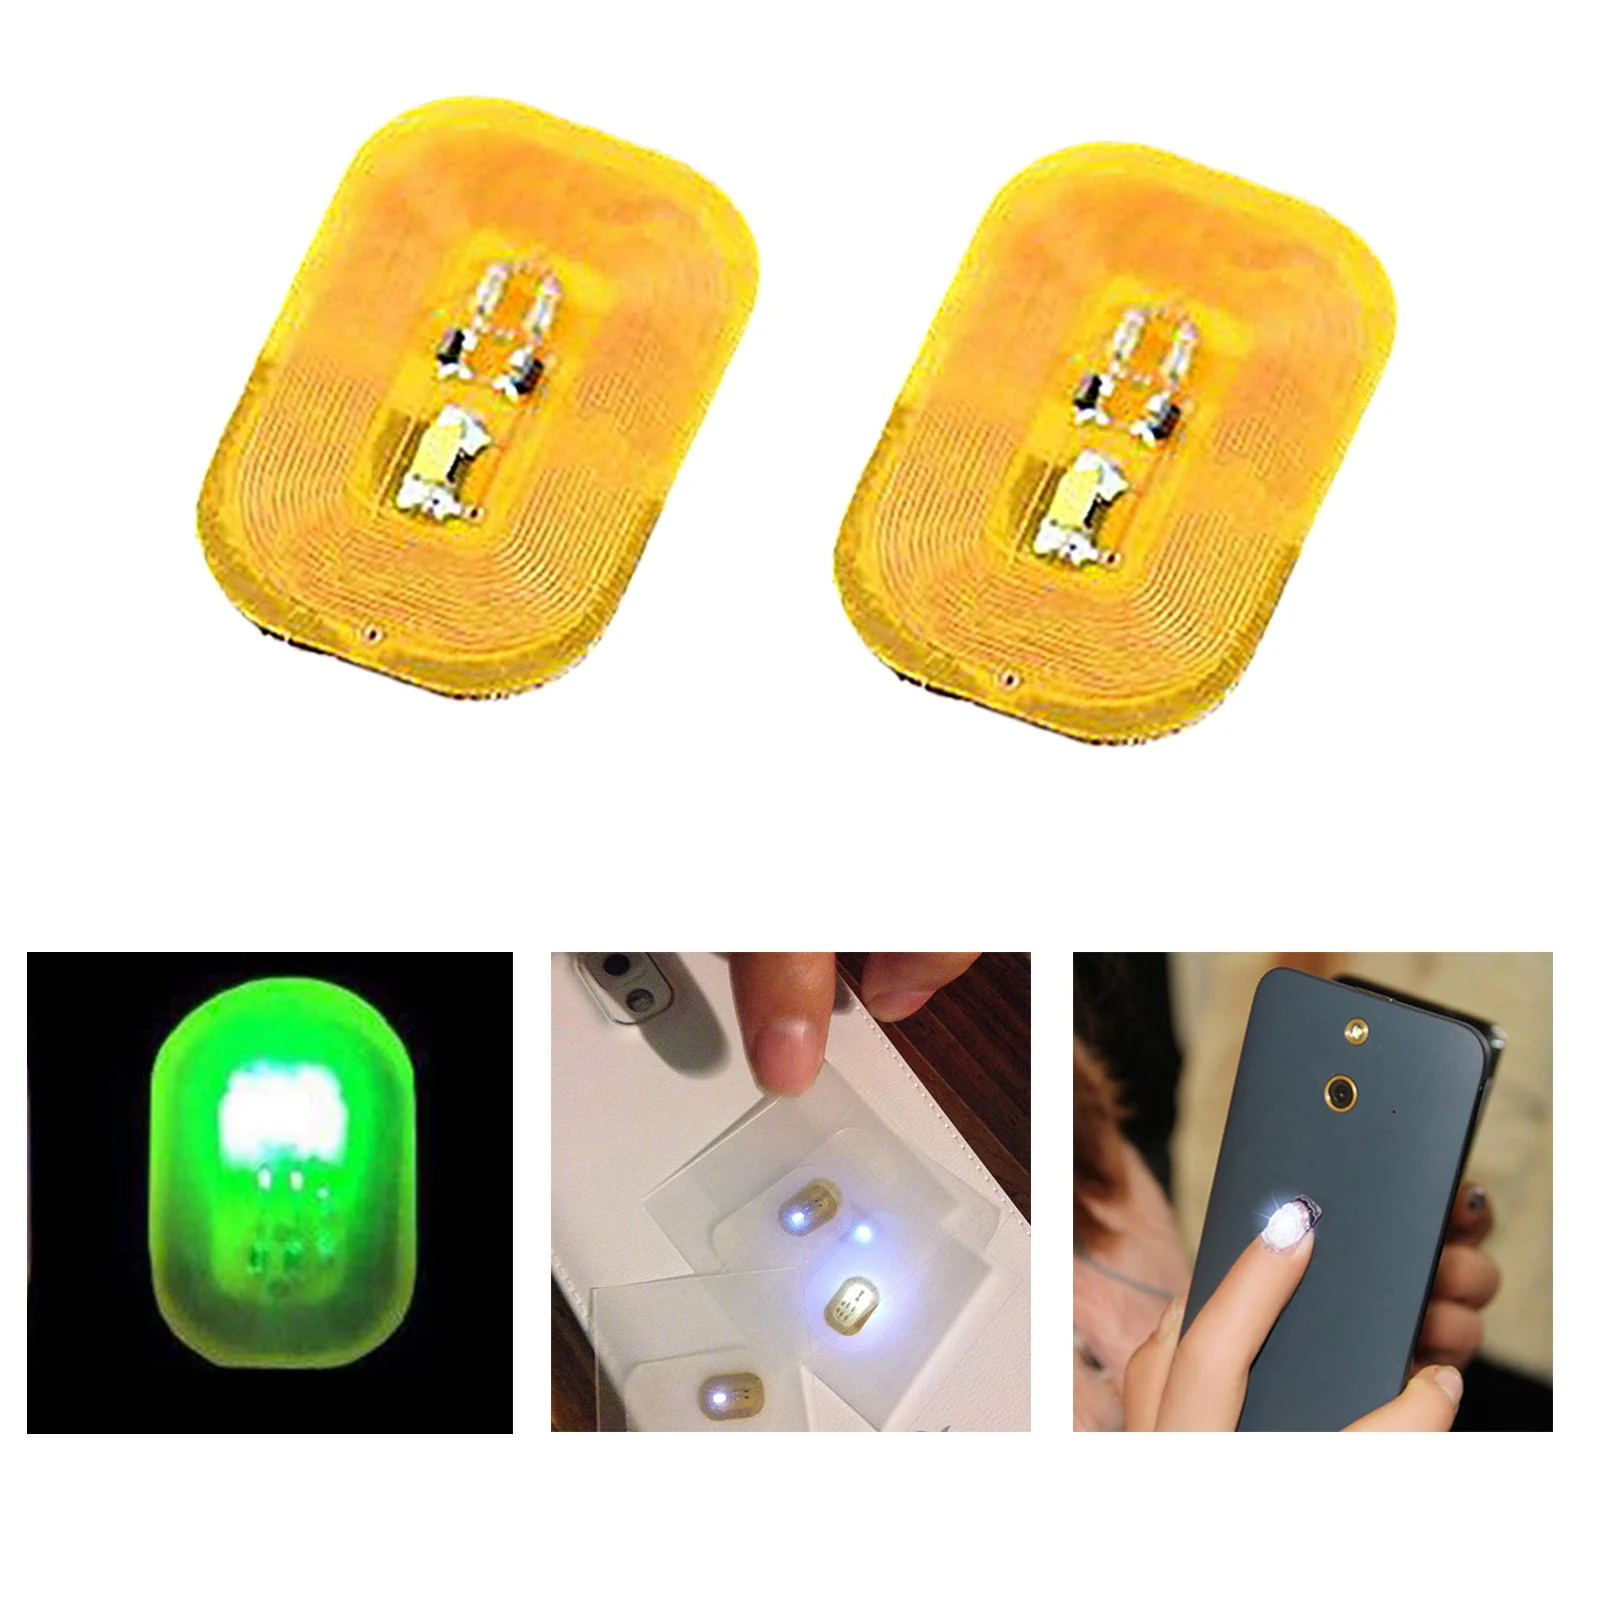 2 Pieces Luck NFC Chip Nail Art Sticker Lamp Scintillation Decor Phone